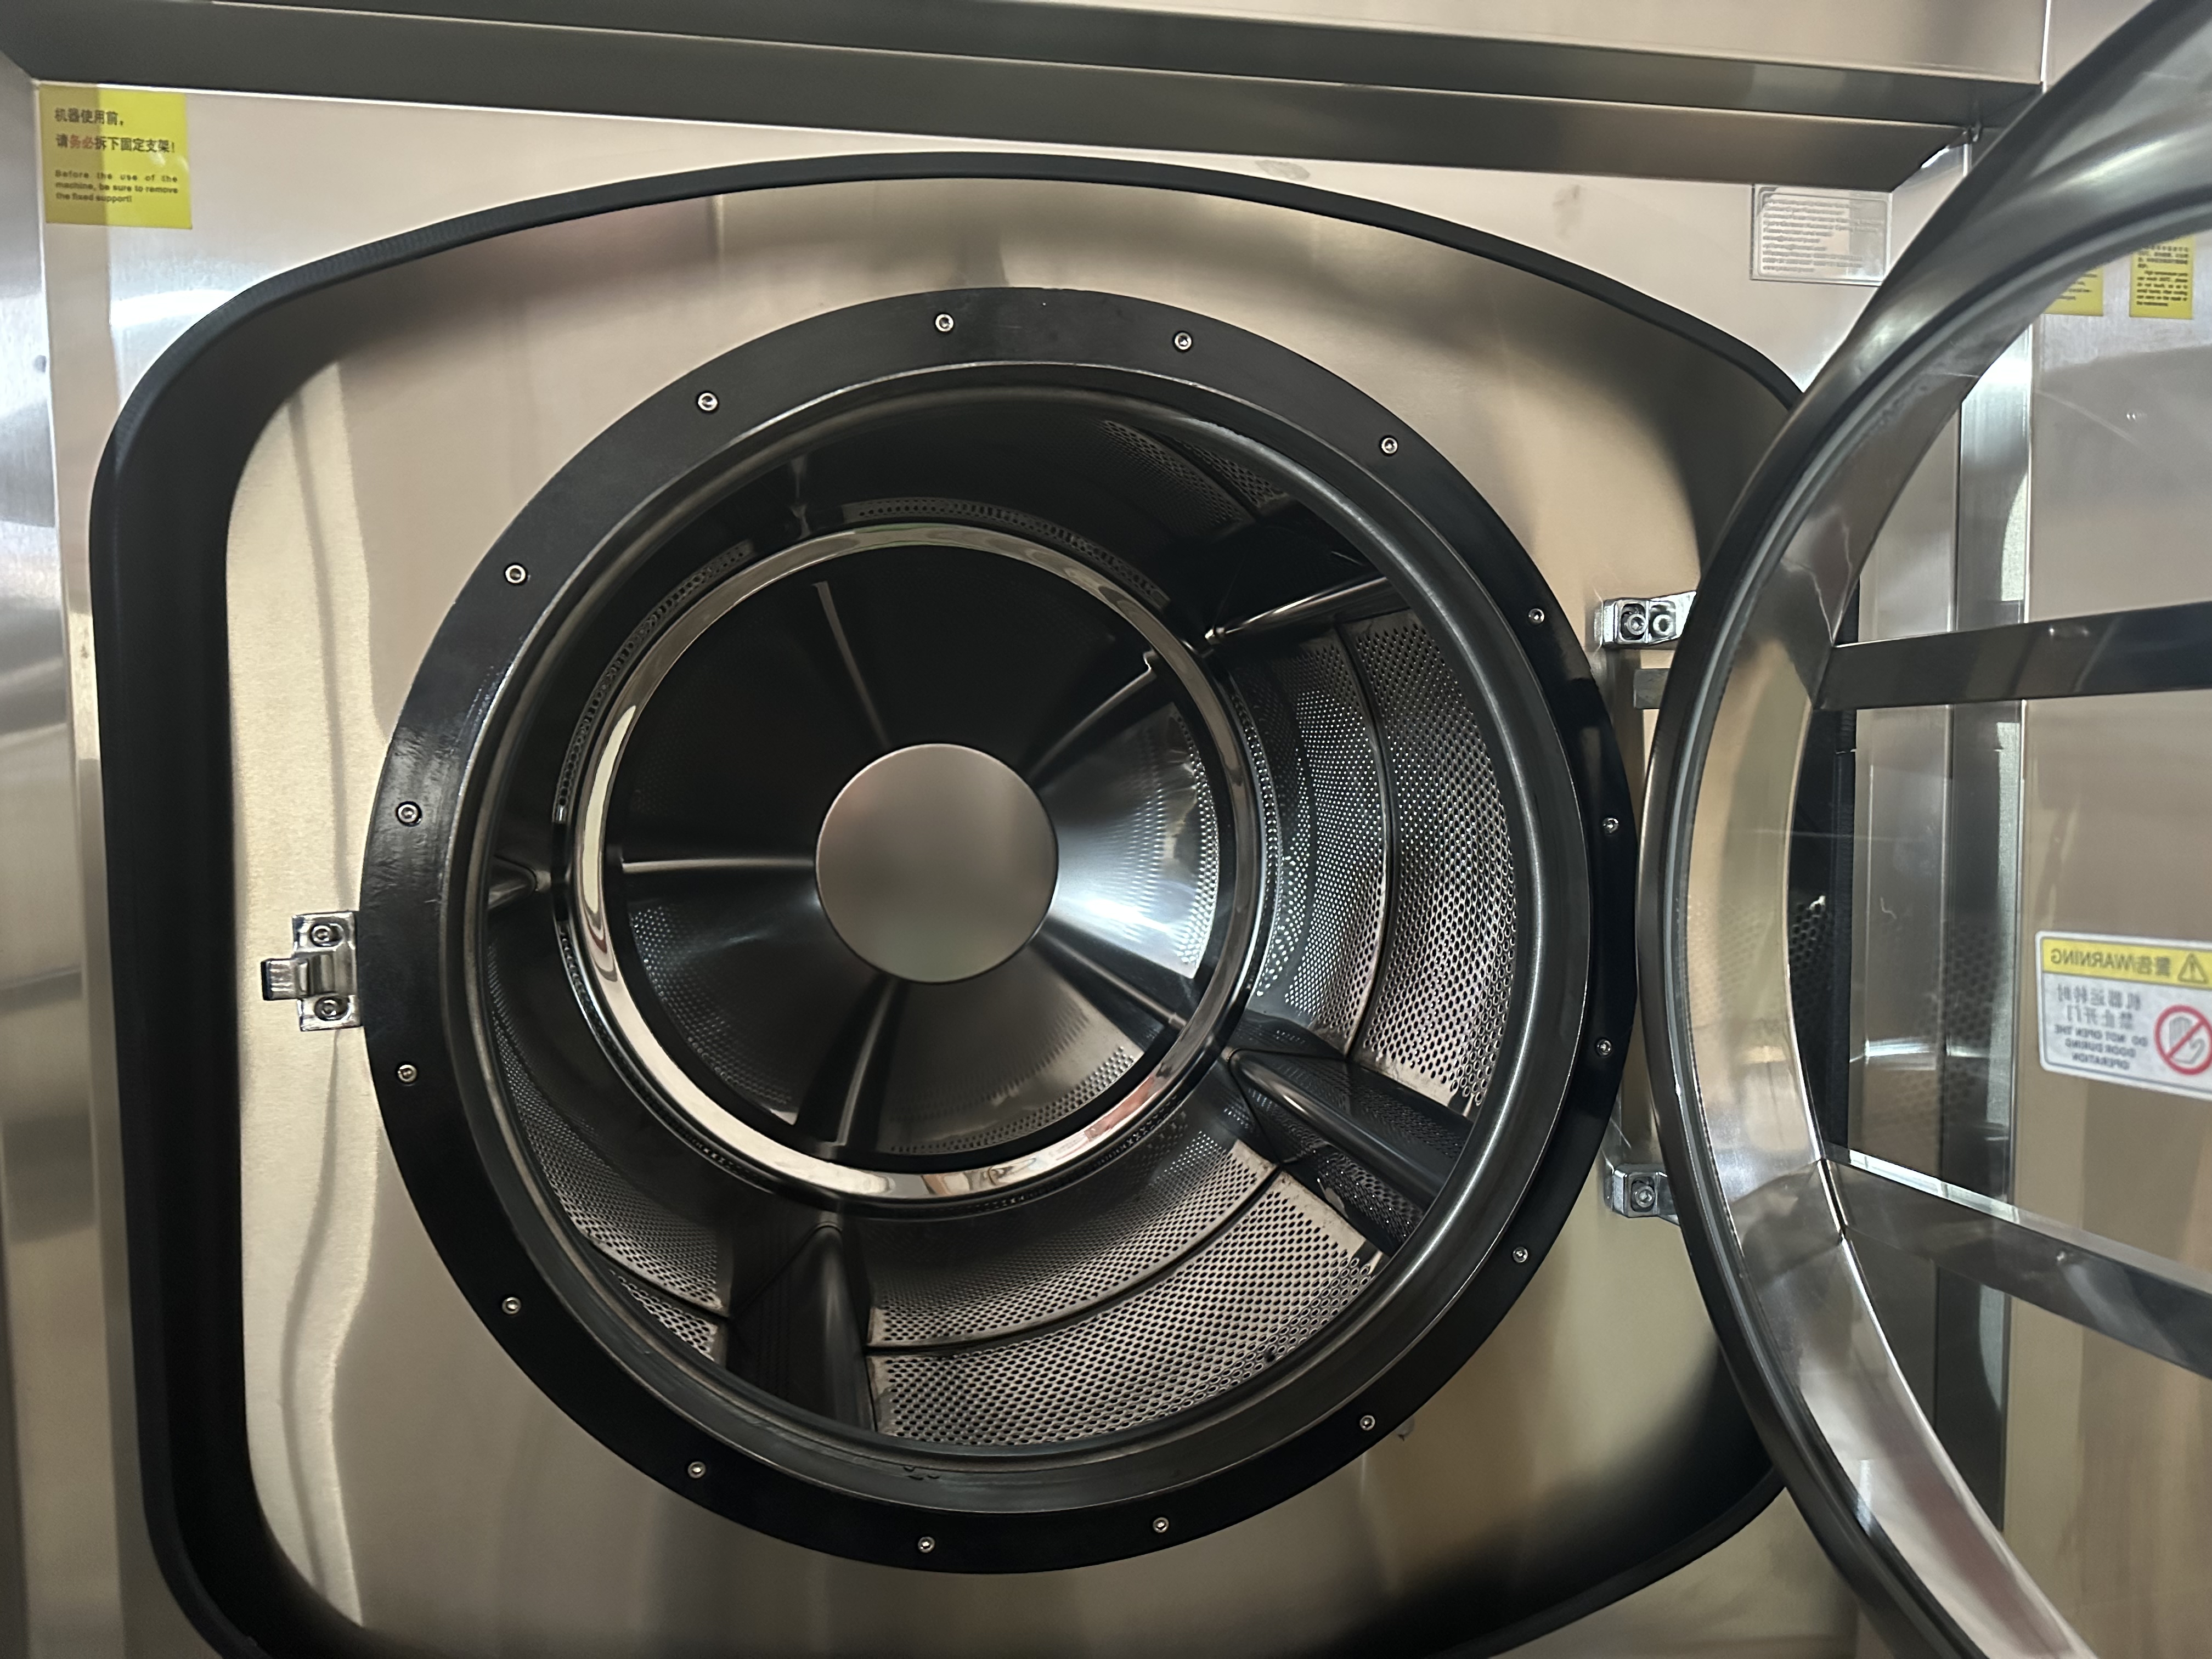 laundry washing machine